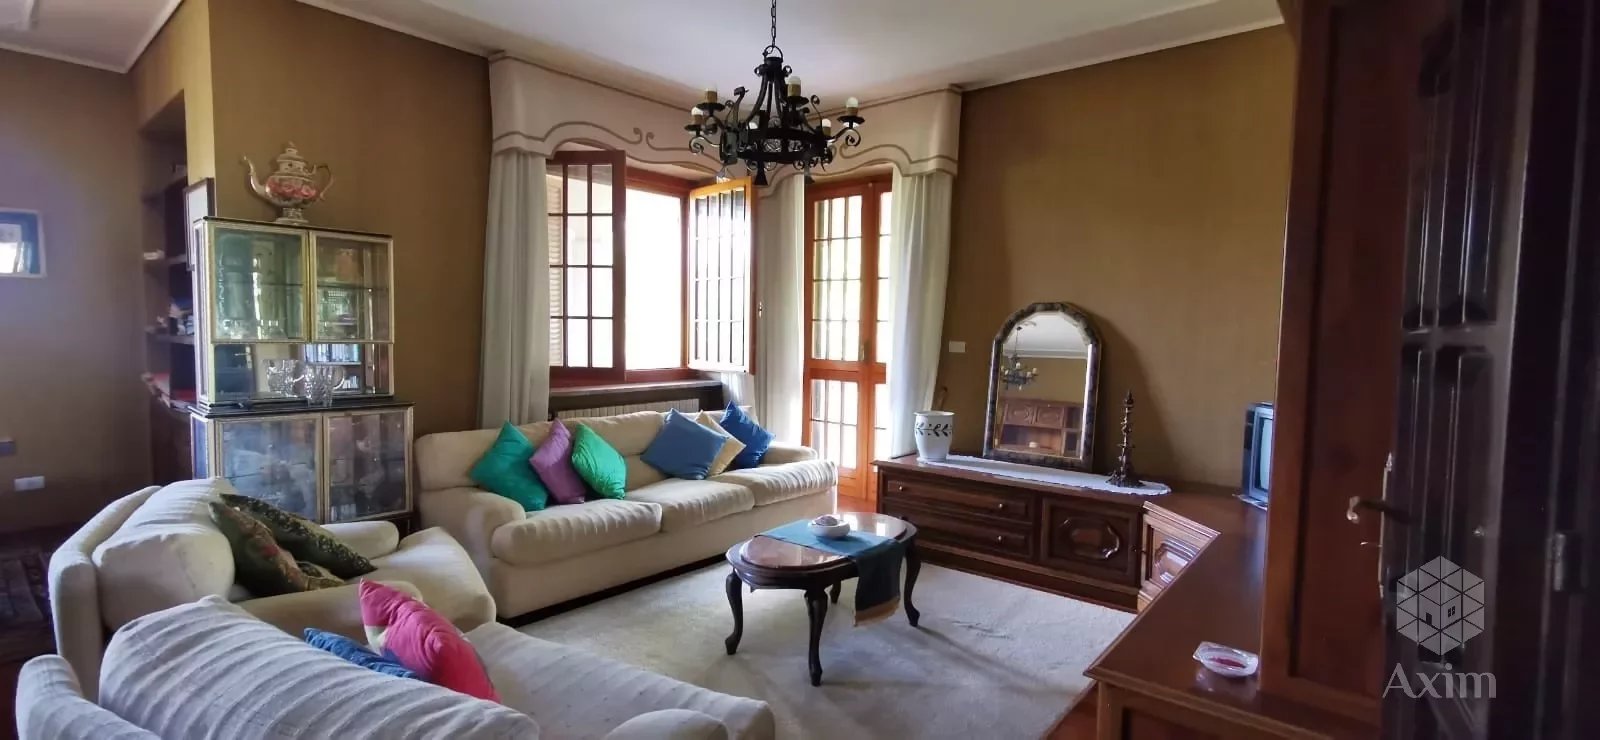 Living-room Carpet Chandelier